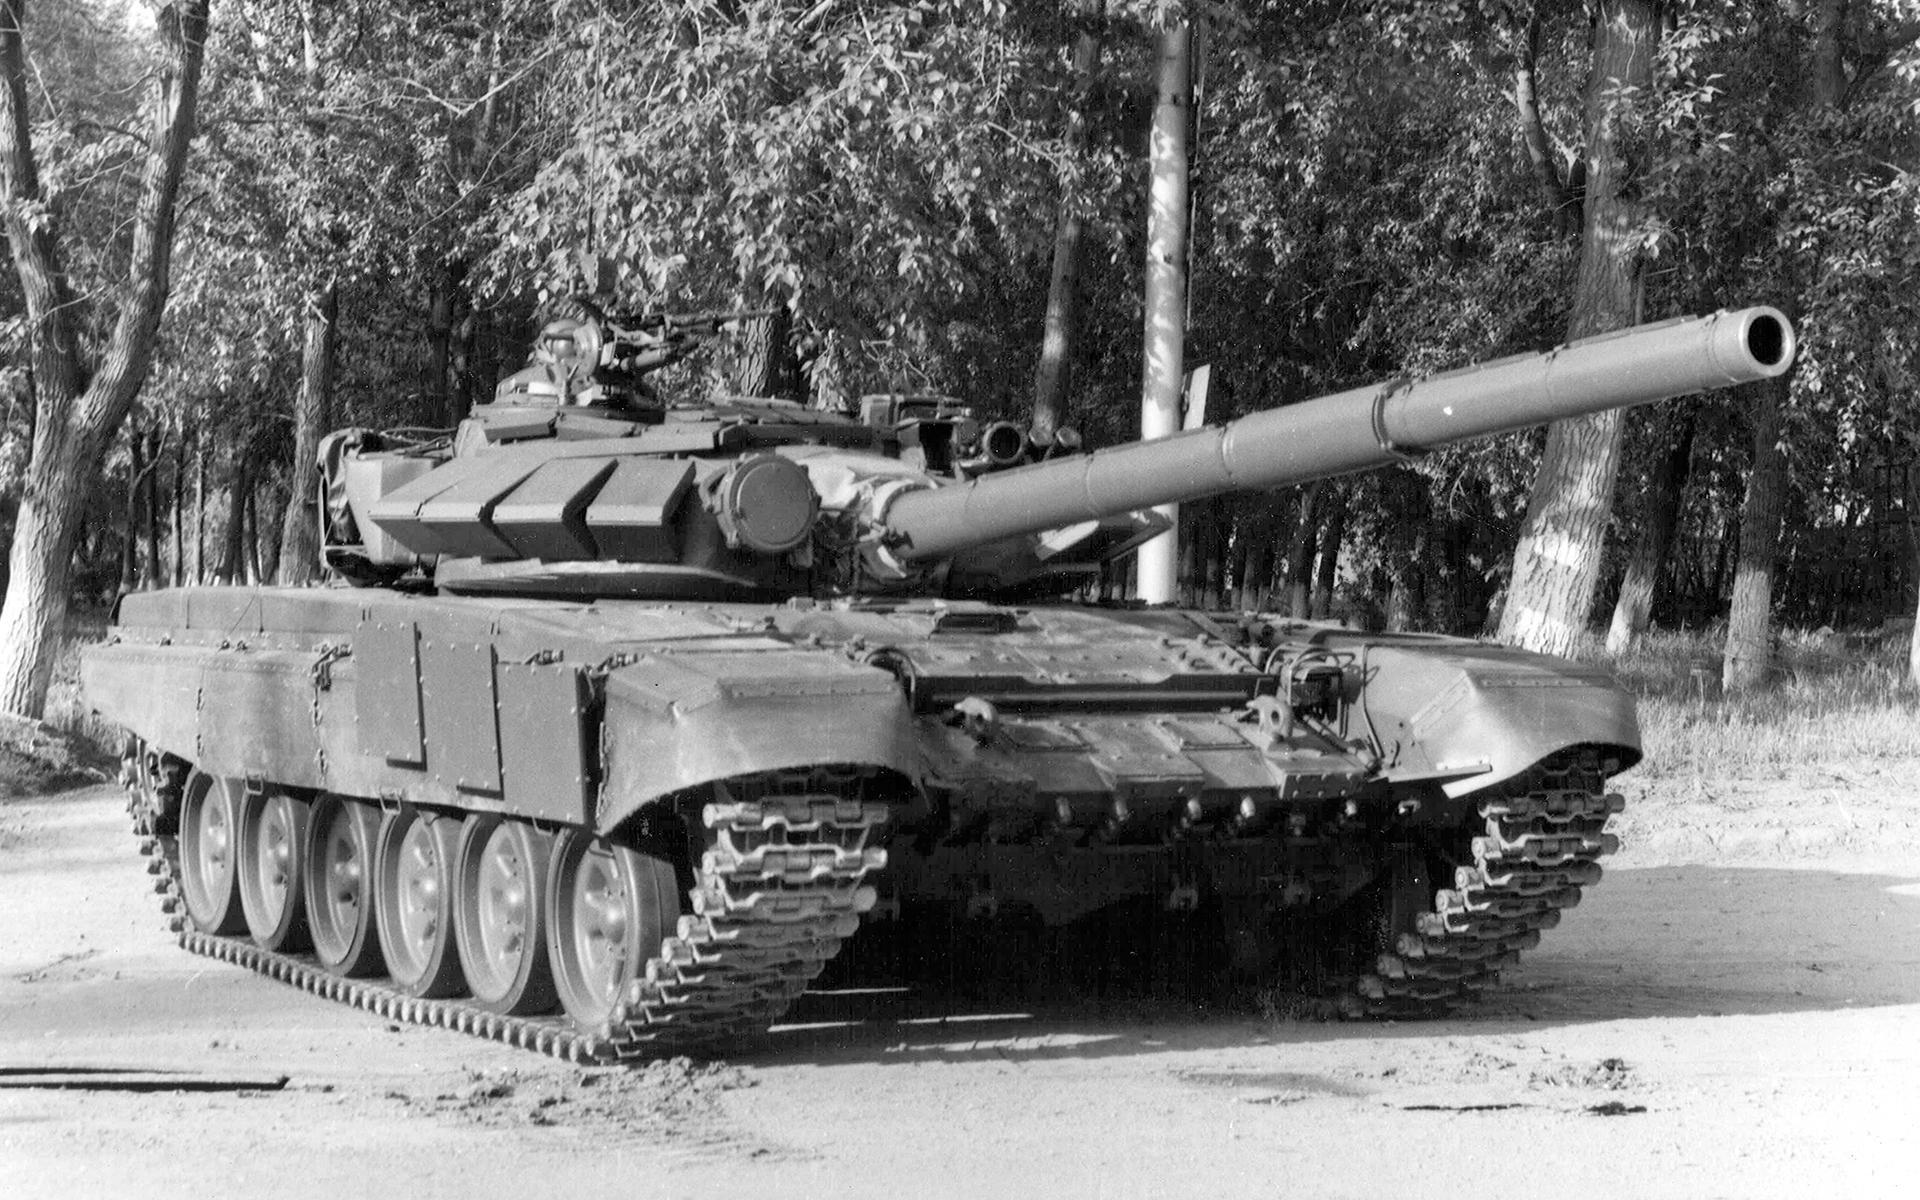 دبابة ذات طباع رياضية تي-72بي3 -KYwxlEKC0m8o6Vqe-Li